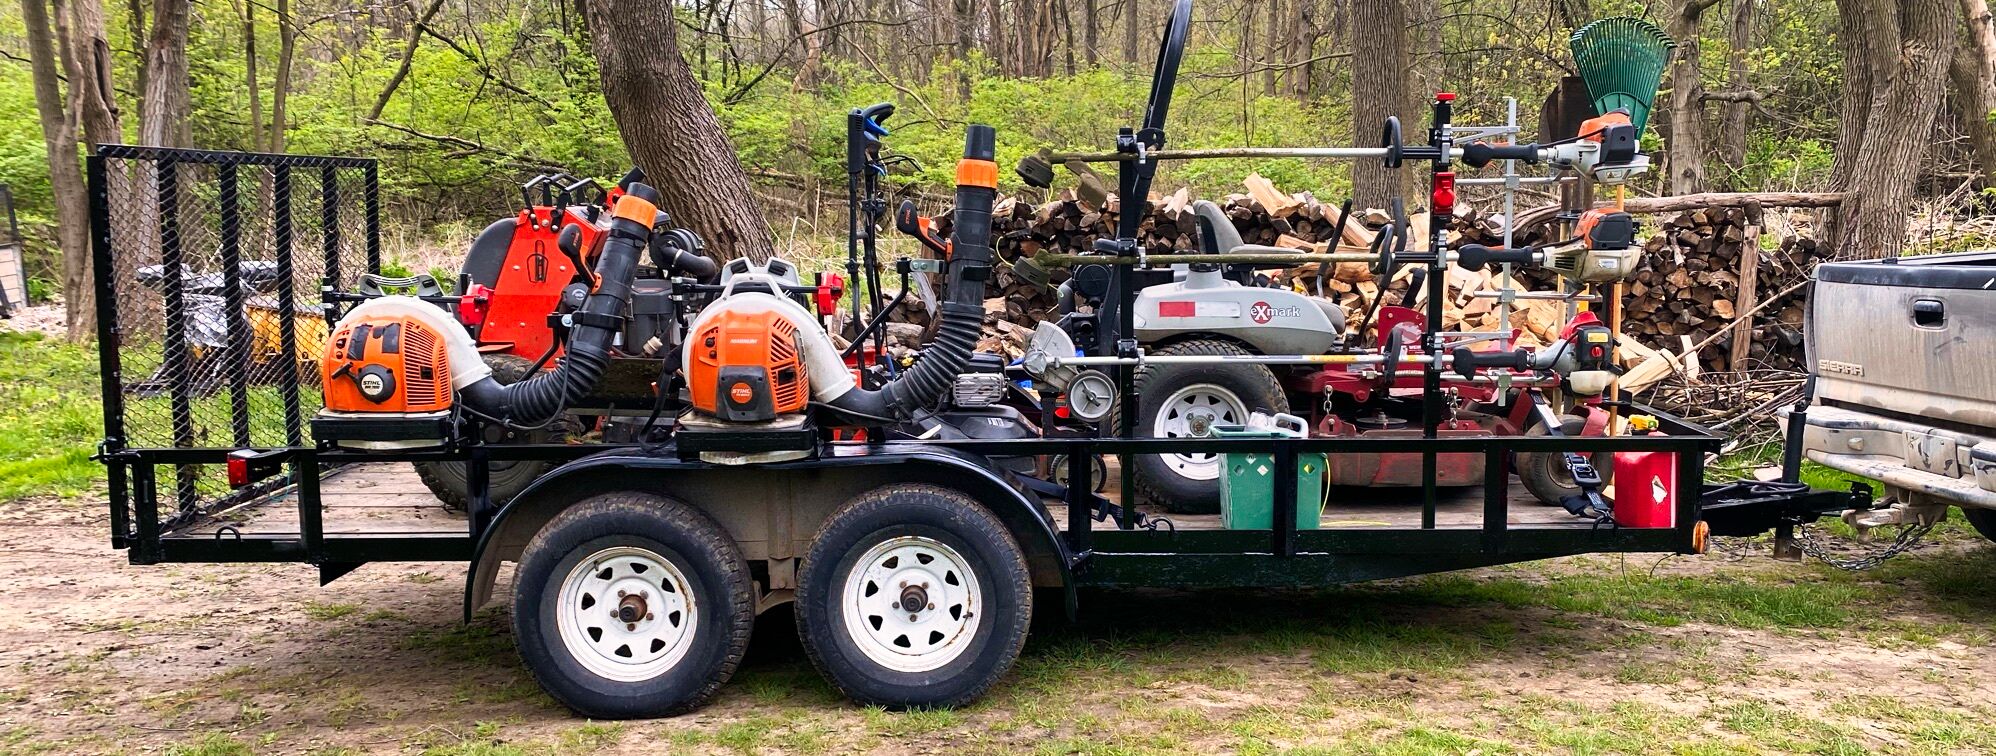 lawn care trailer setup